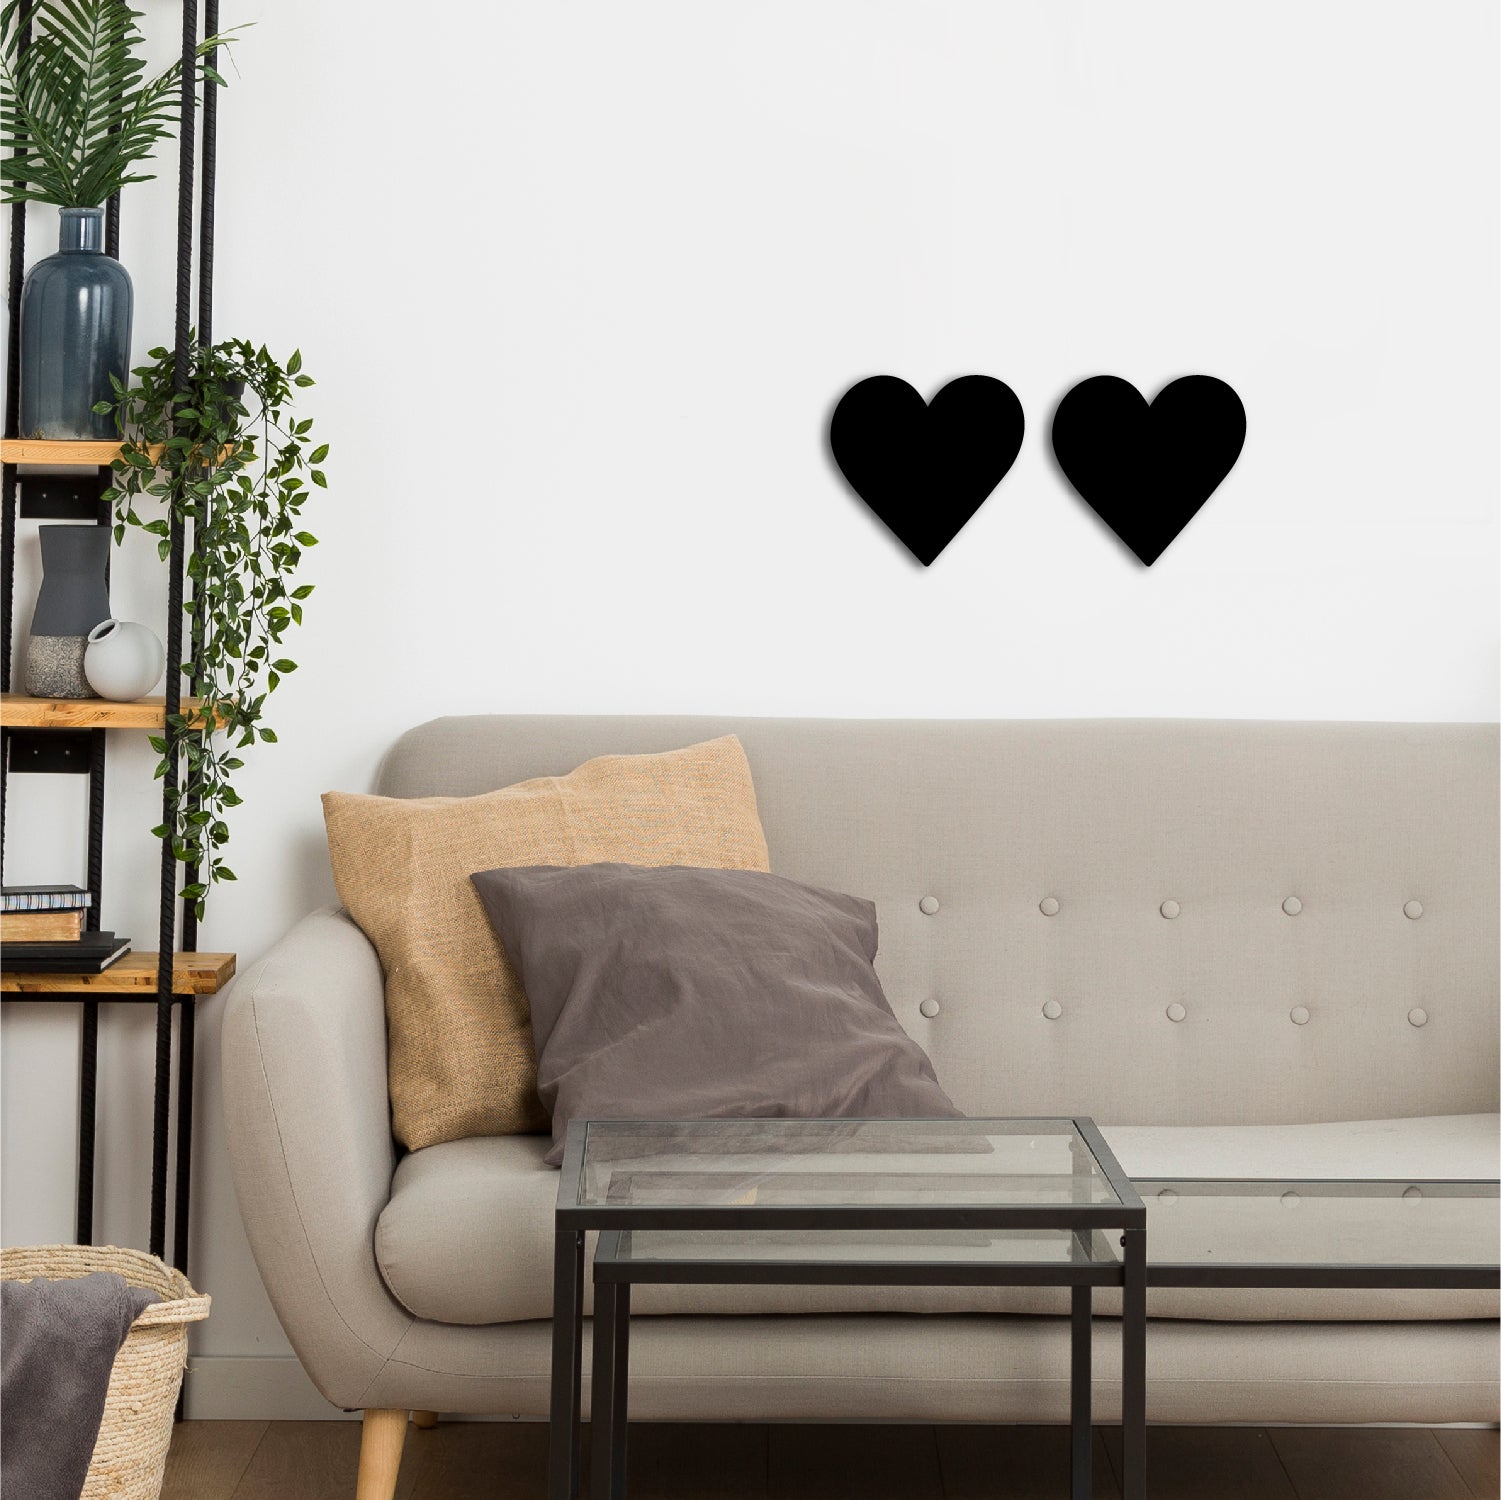 Set of 2 "Hearts" Black Engineered Wood Wall Art Cutout, Ready to Hang Home Decor 4